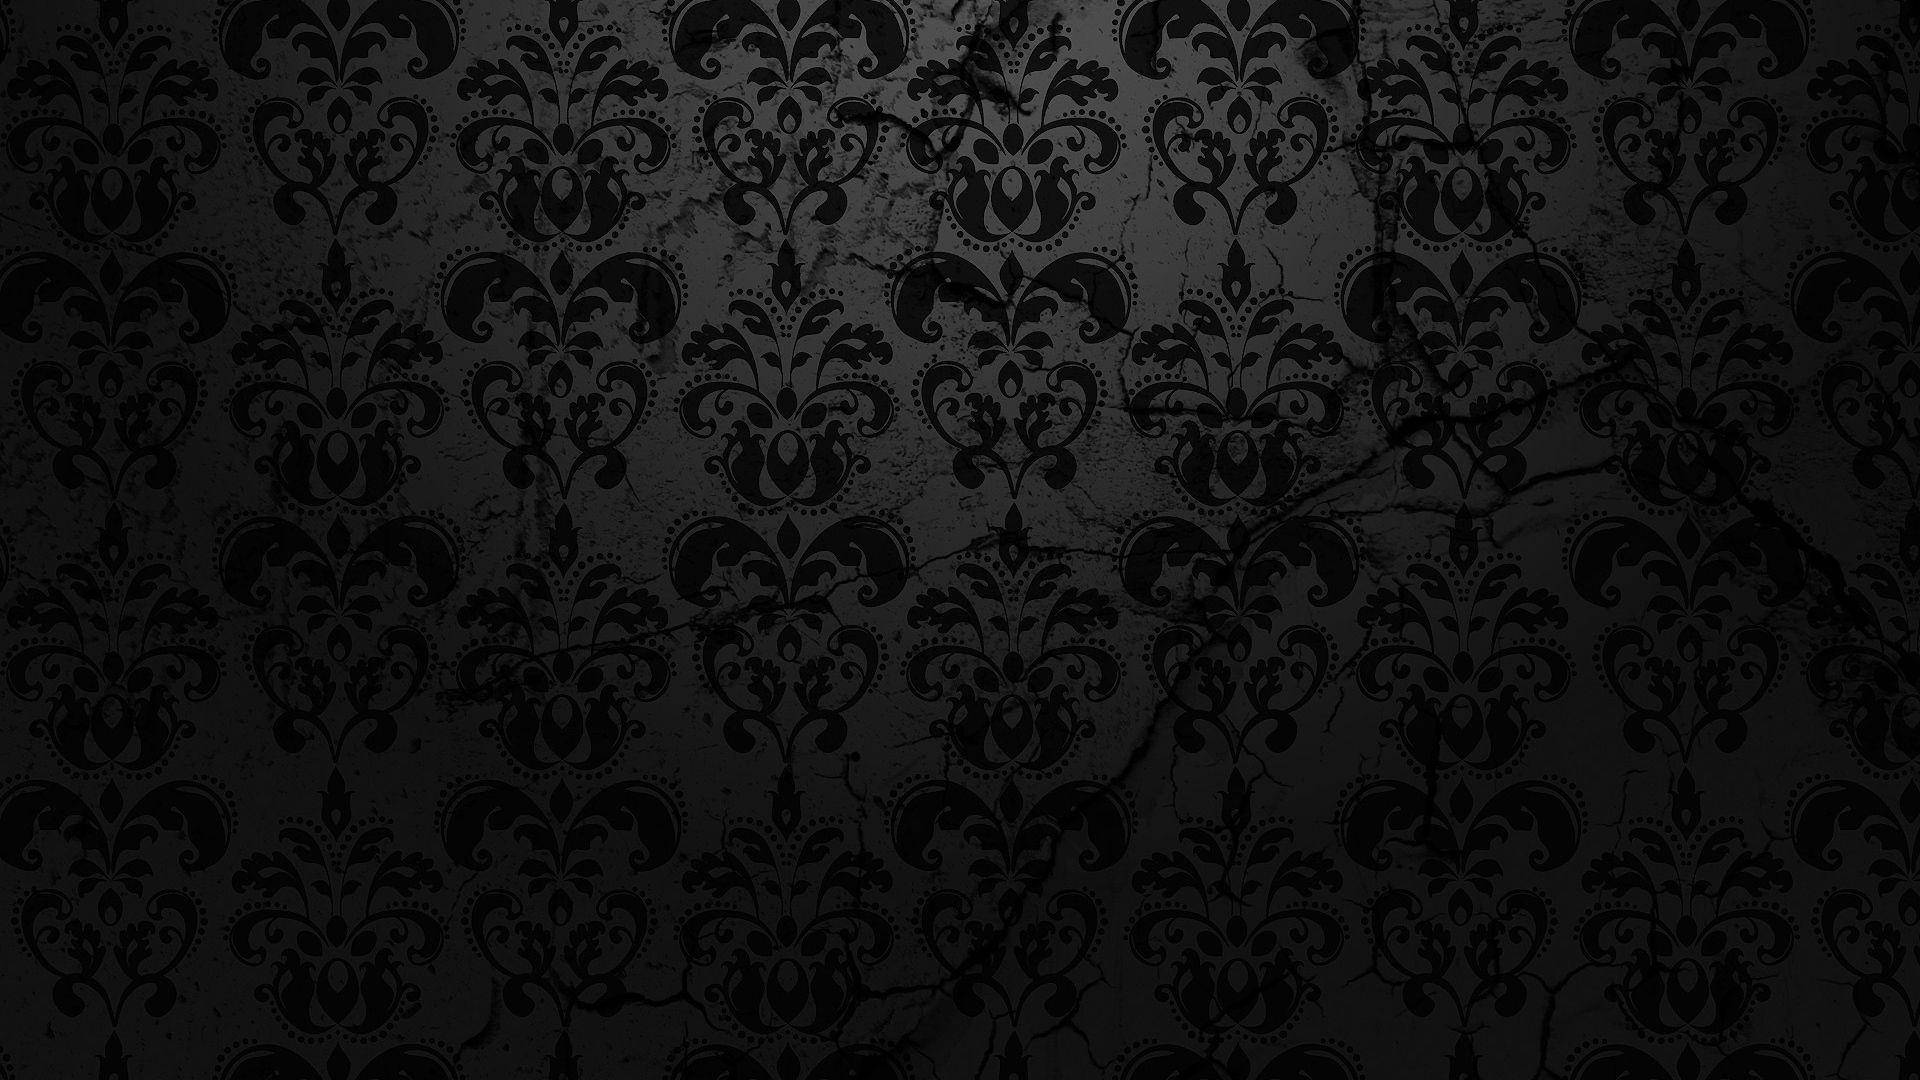 Plain Black With Ornate Floral Pattern Wallpaper